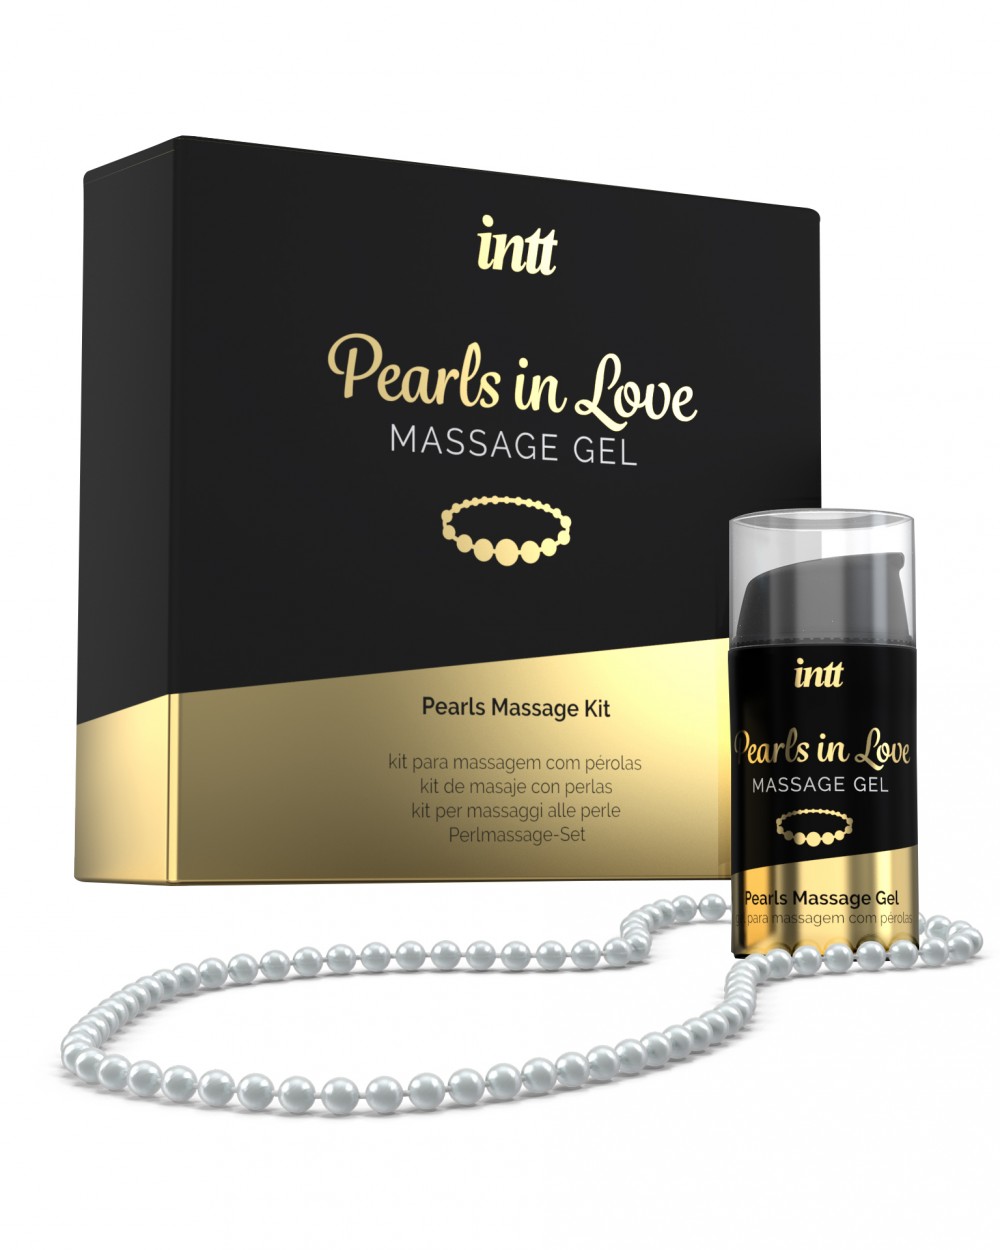 Pearls-In-Love-Kit—perola-1000x1250h